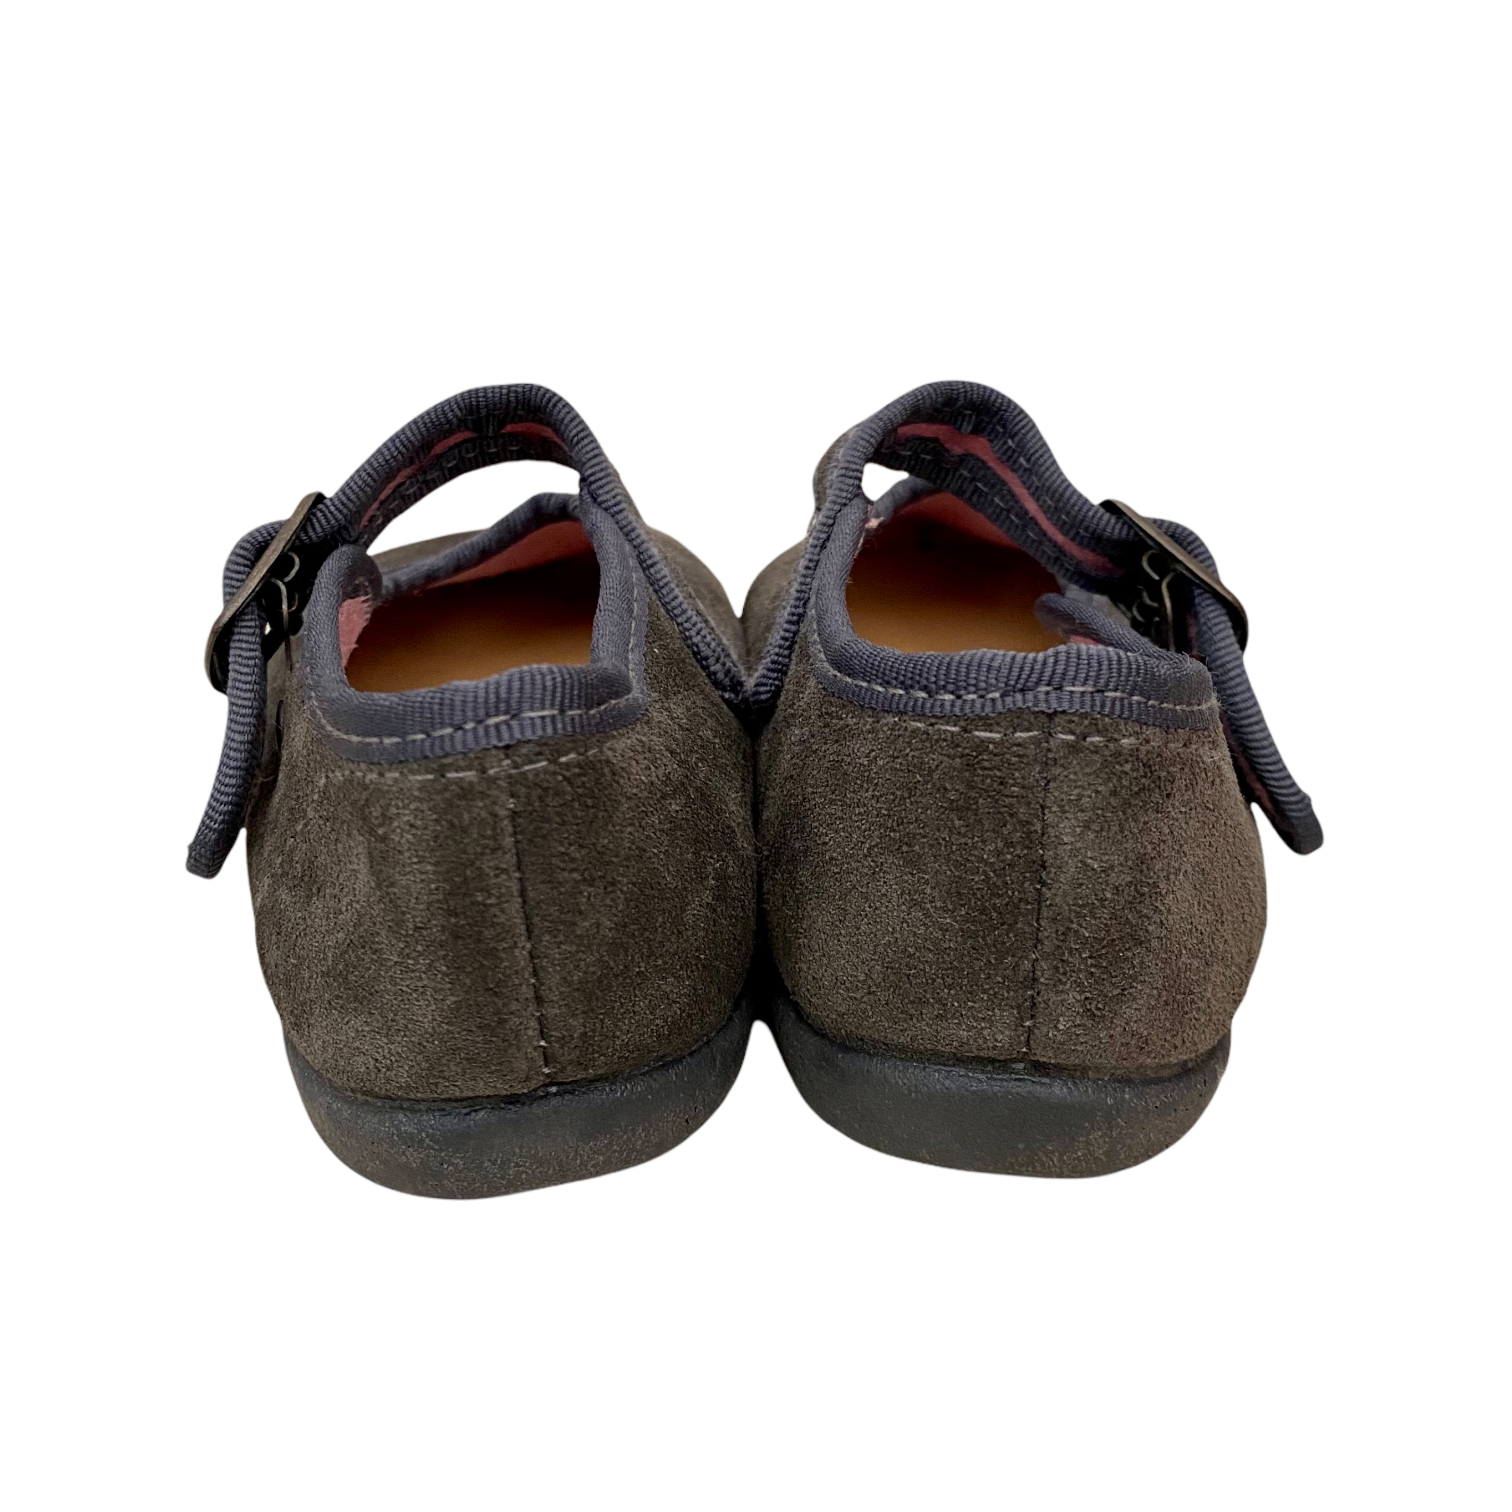 Zapatos Pachus Eur25 (16cms) - BabyCo.